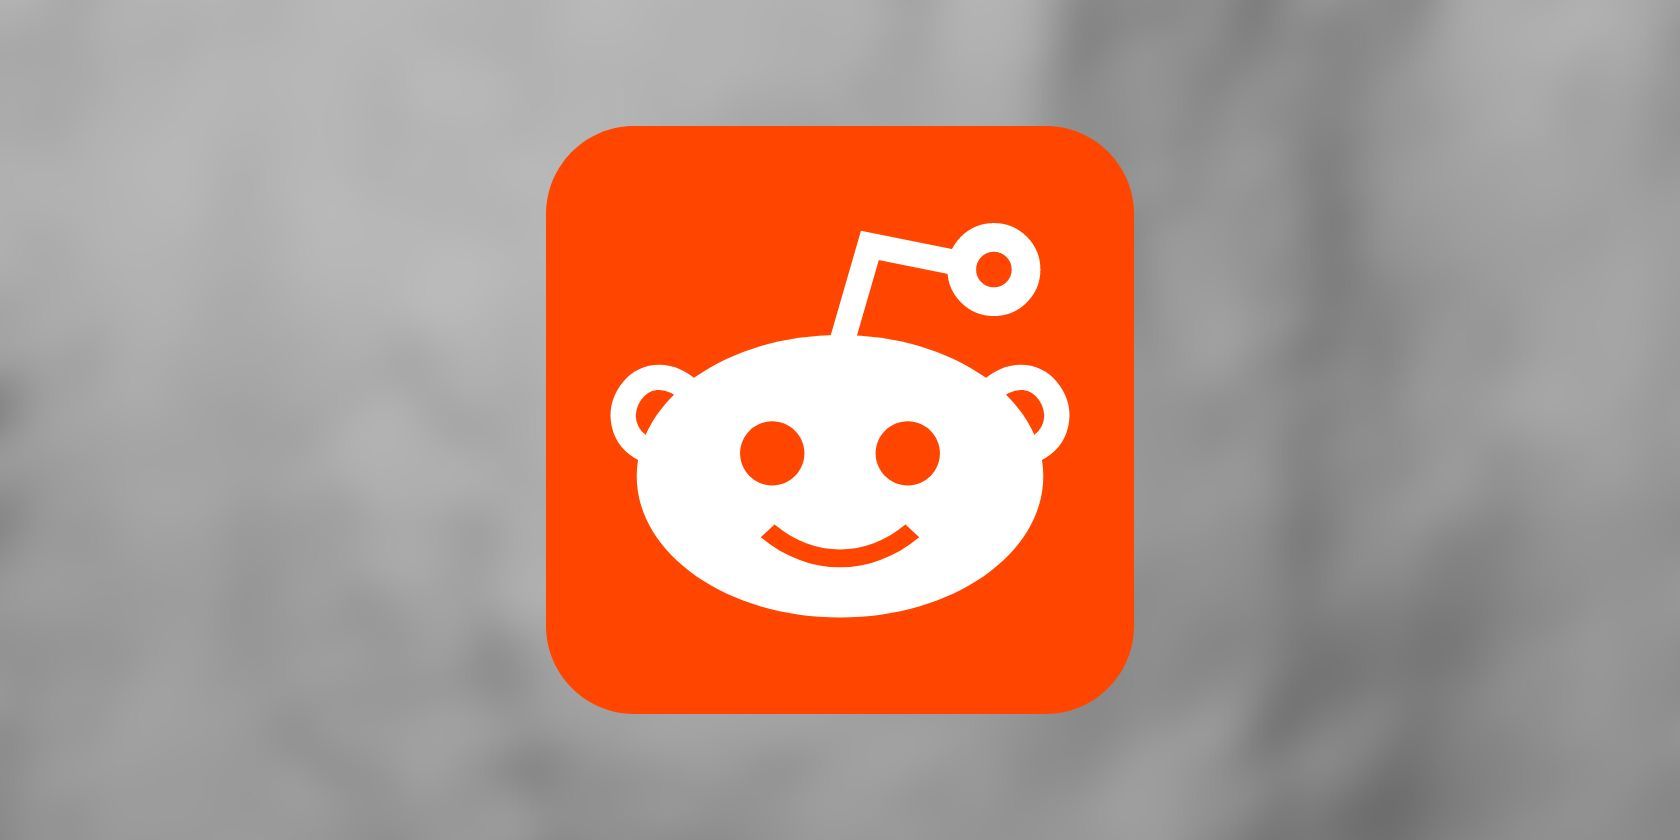 Reddit logo seen on grey background 